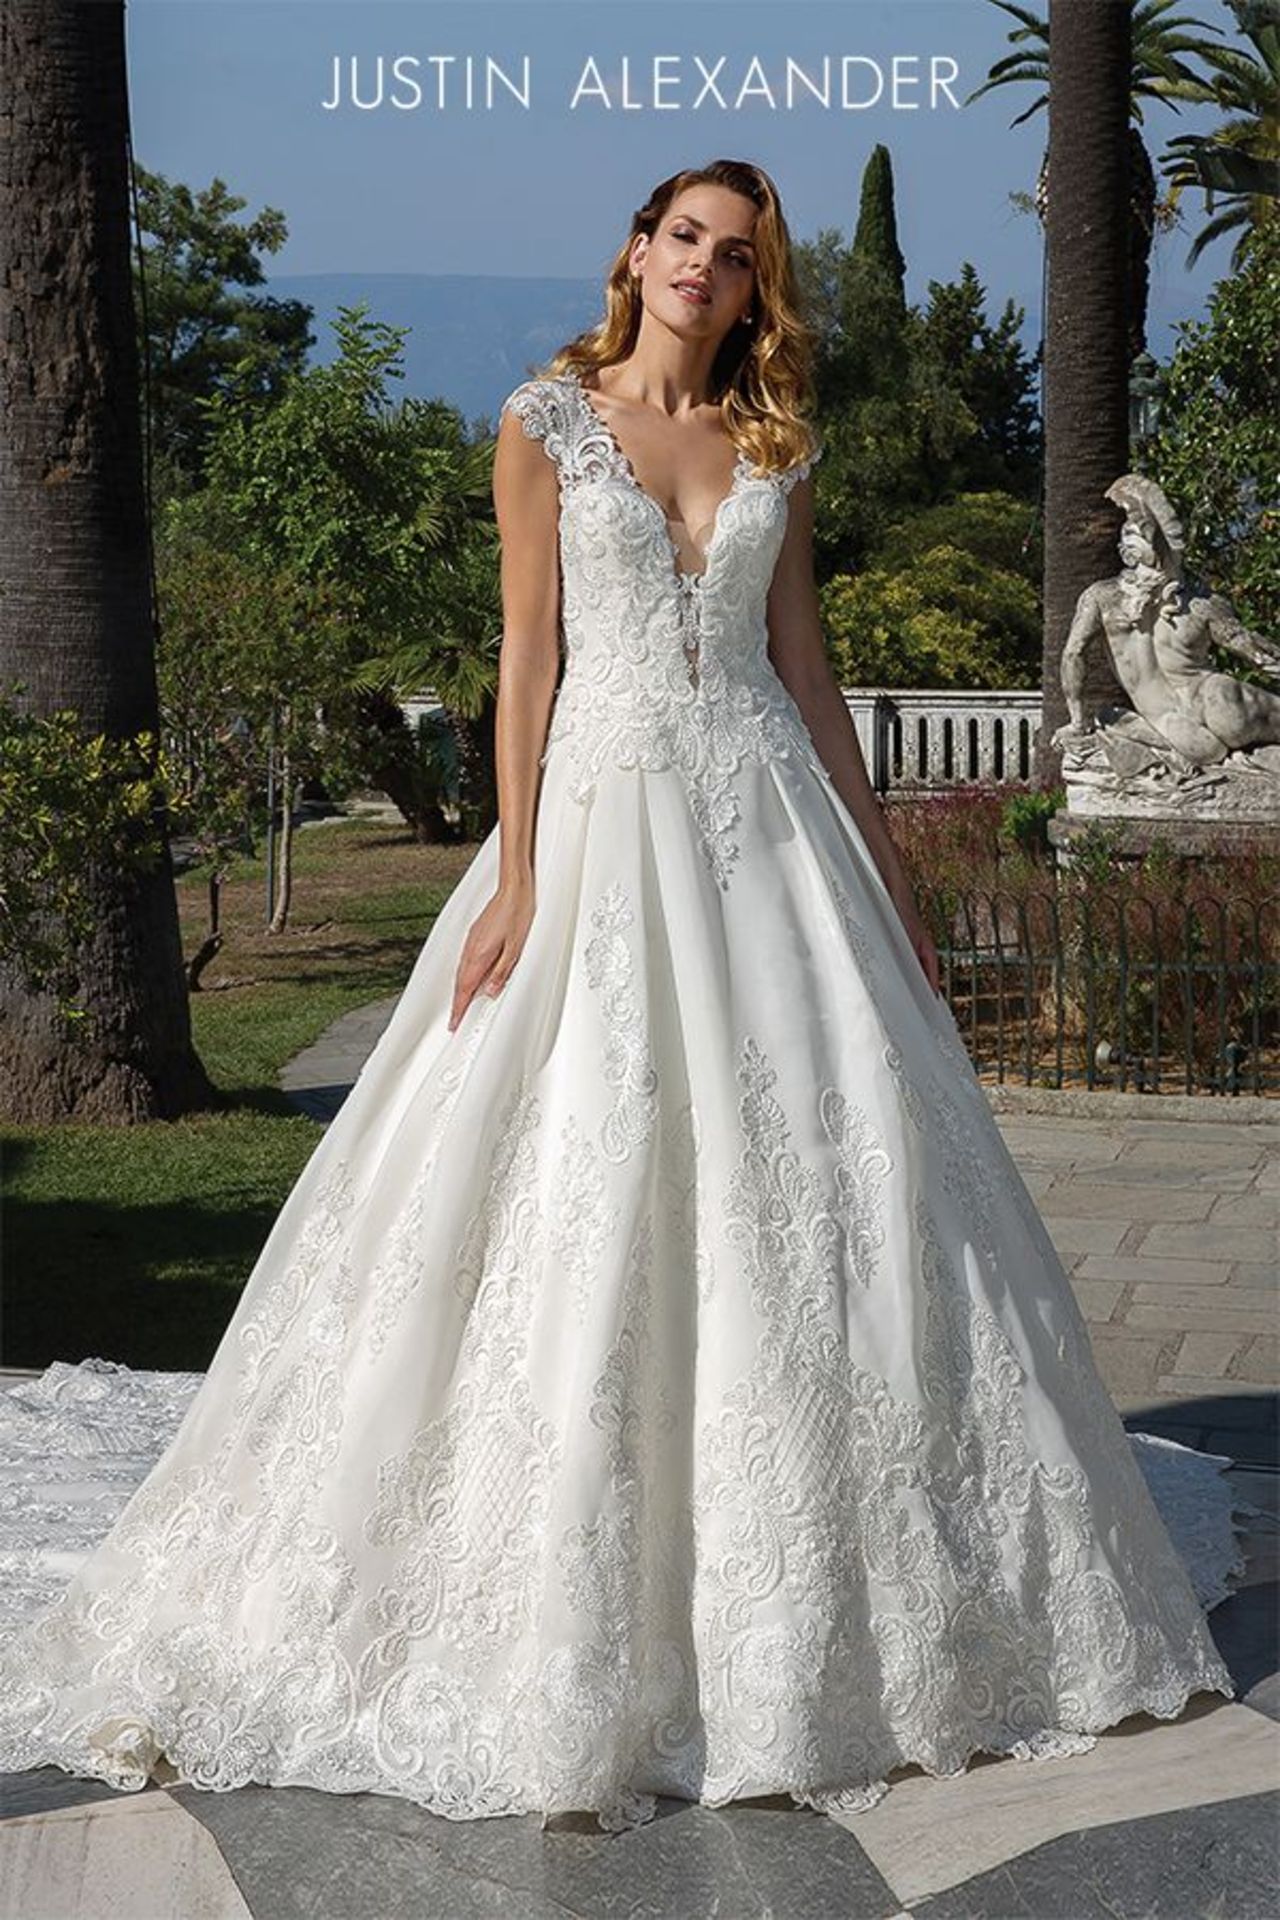 1 x Justin Alexander Designer Organdy Wedding Dress With Plunging Neckline - UK Size 12 - RRP £1,700 - Image 6 of 6